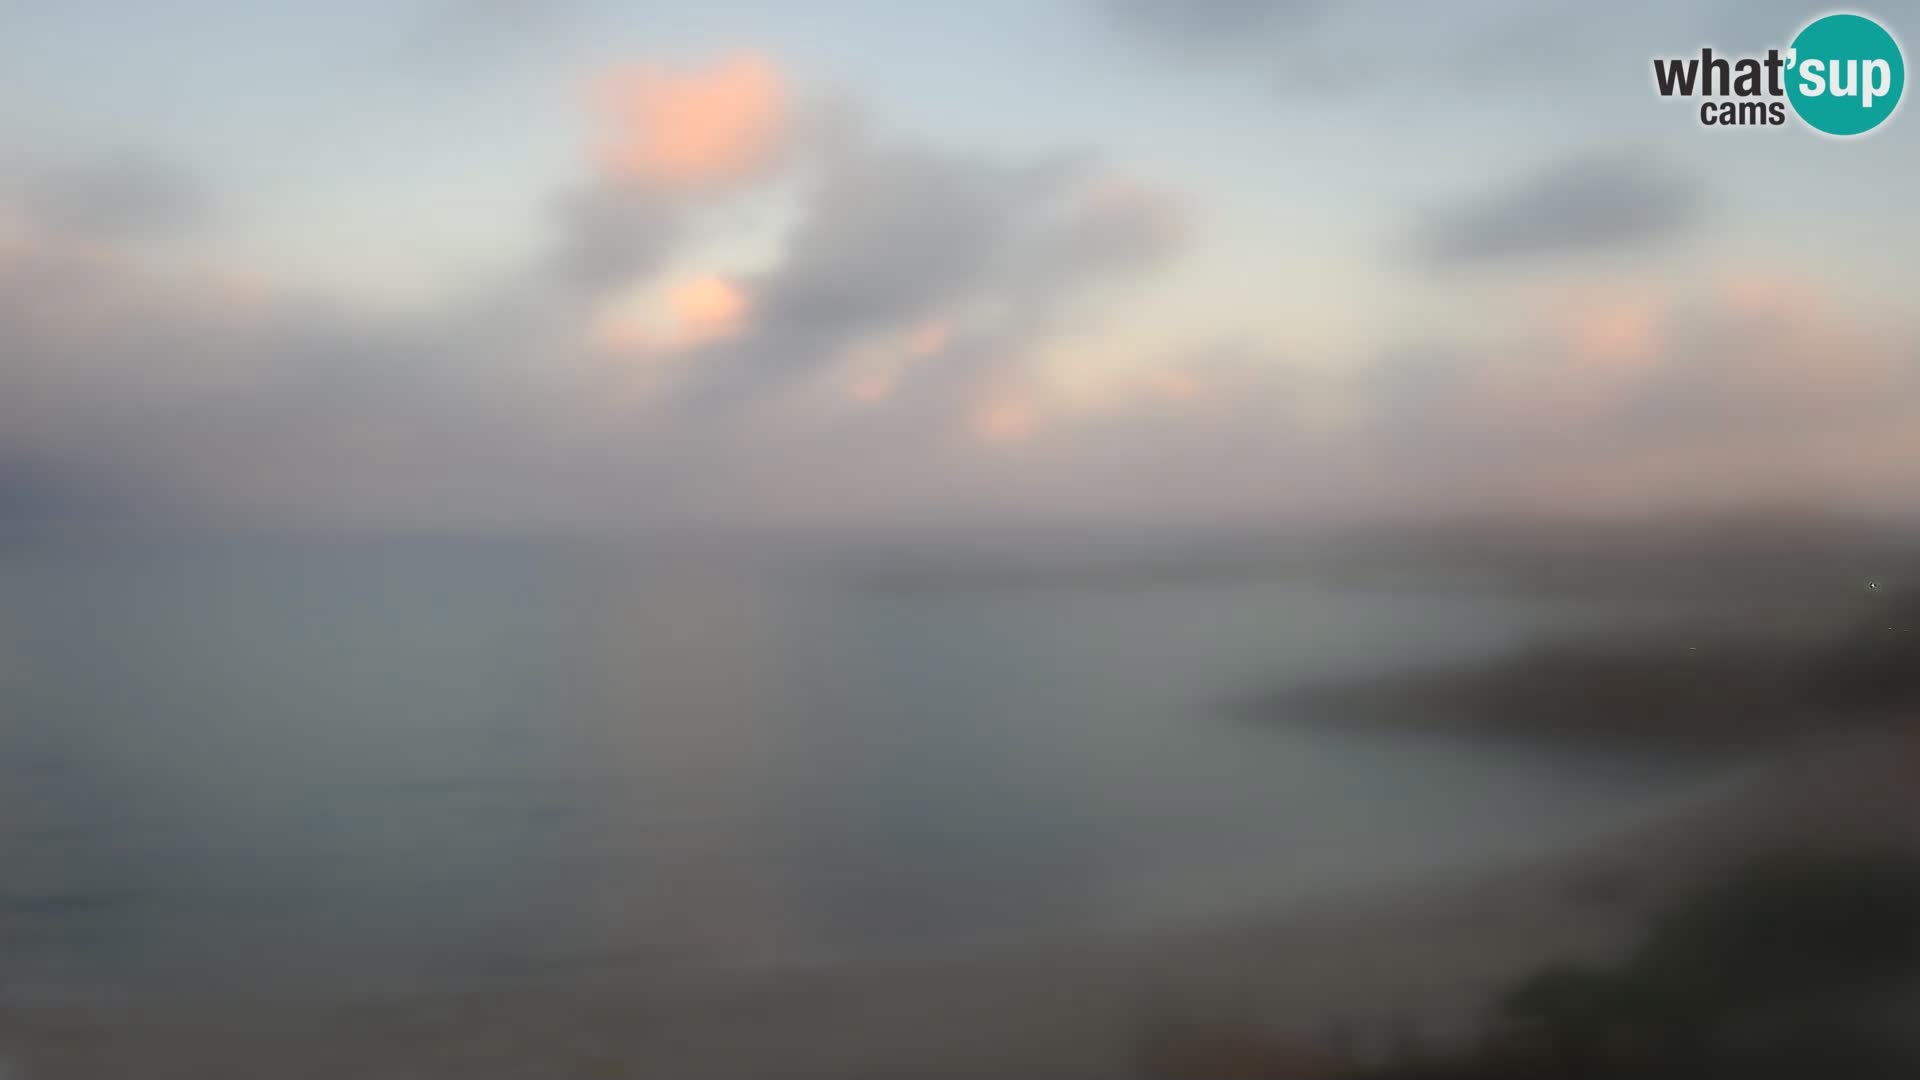 Beach Isola Rossa Webcam – Live View of Sardegna’s Stunning Shoreline